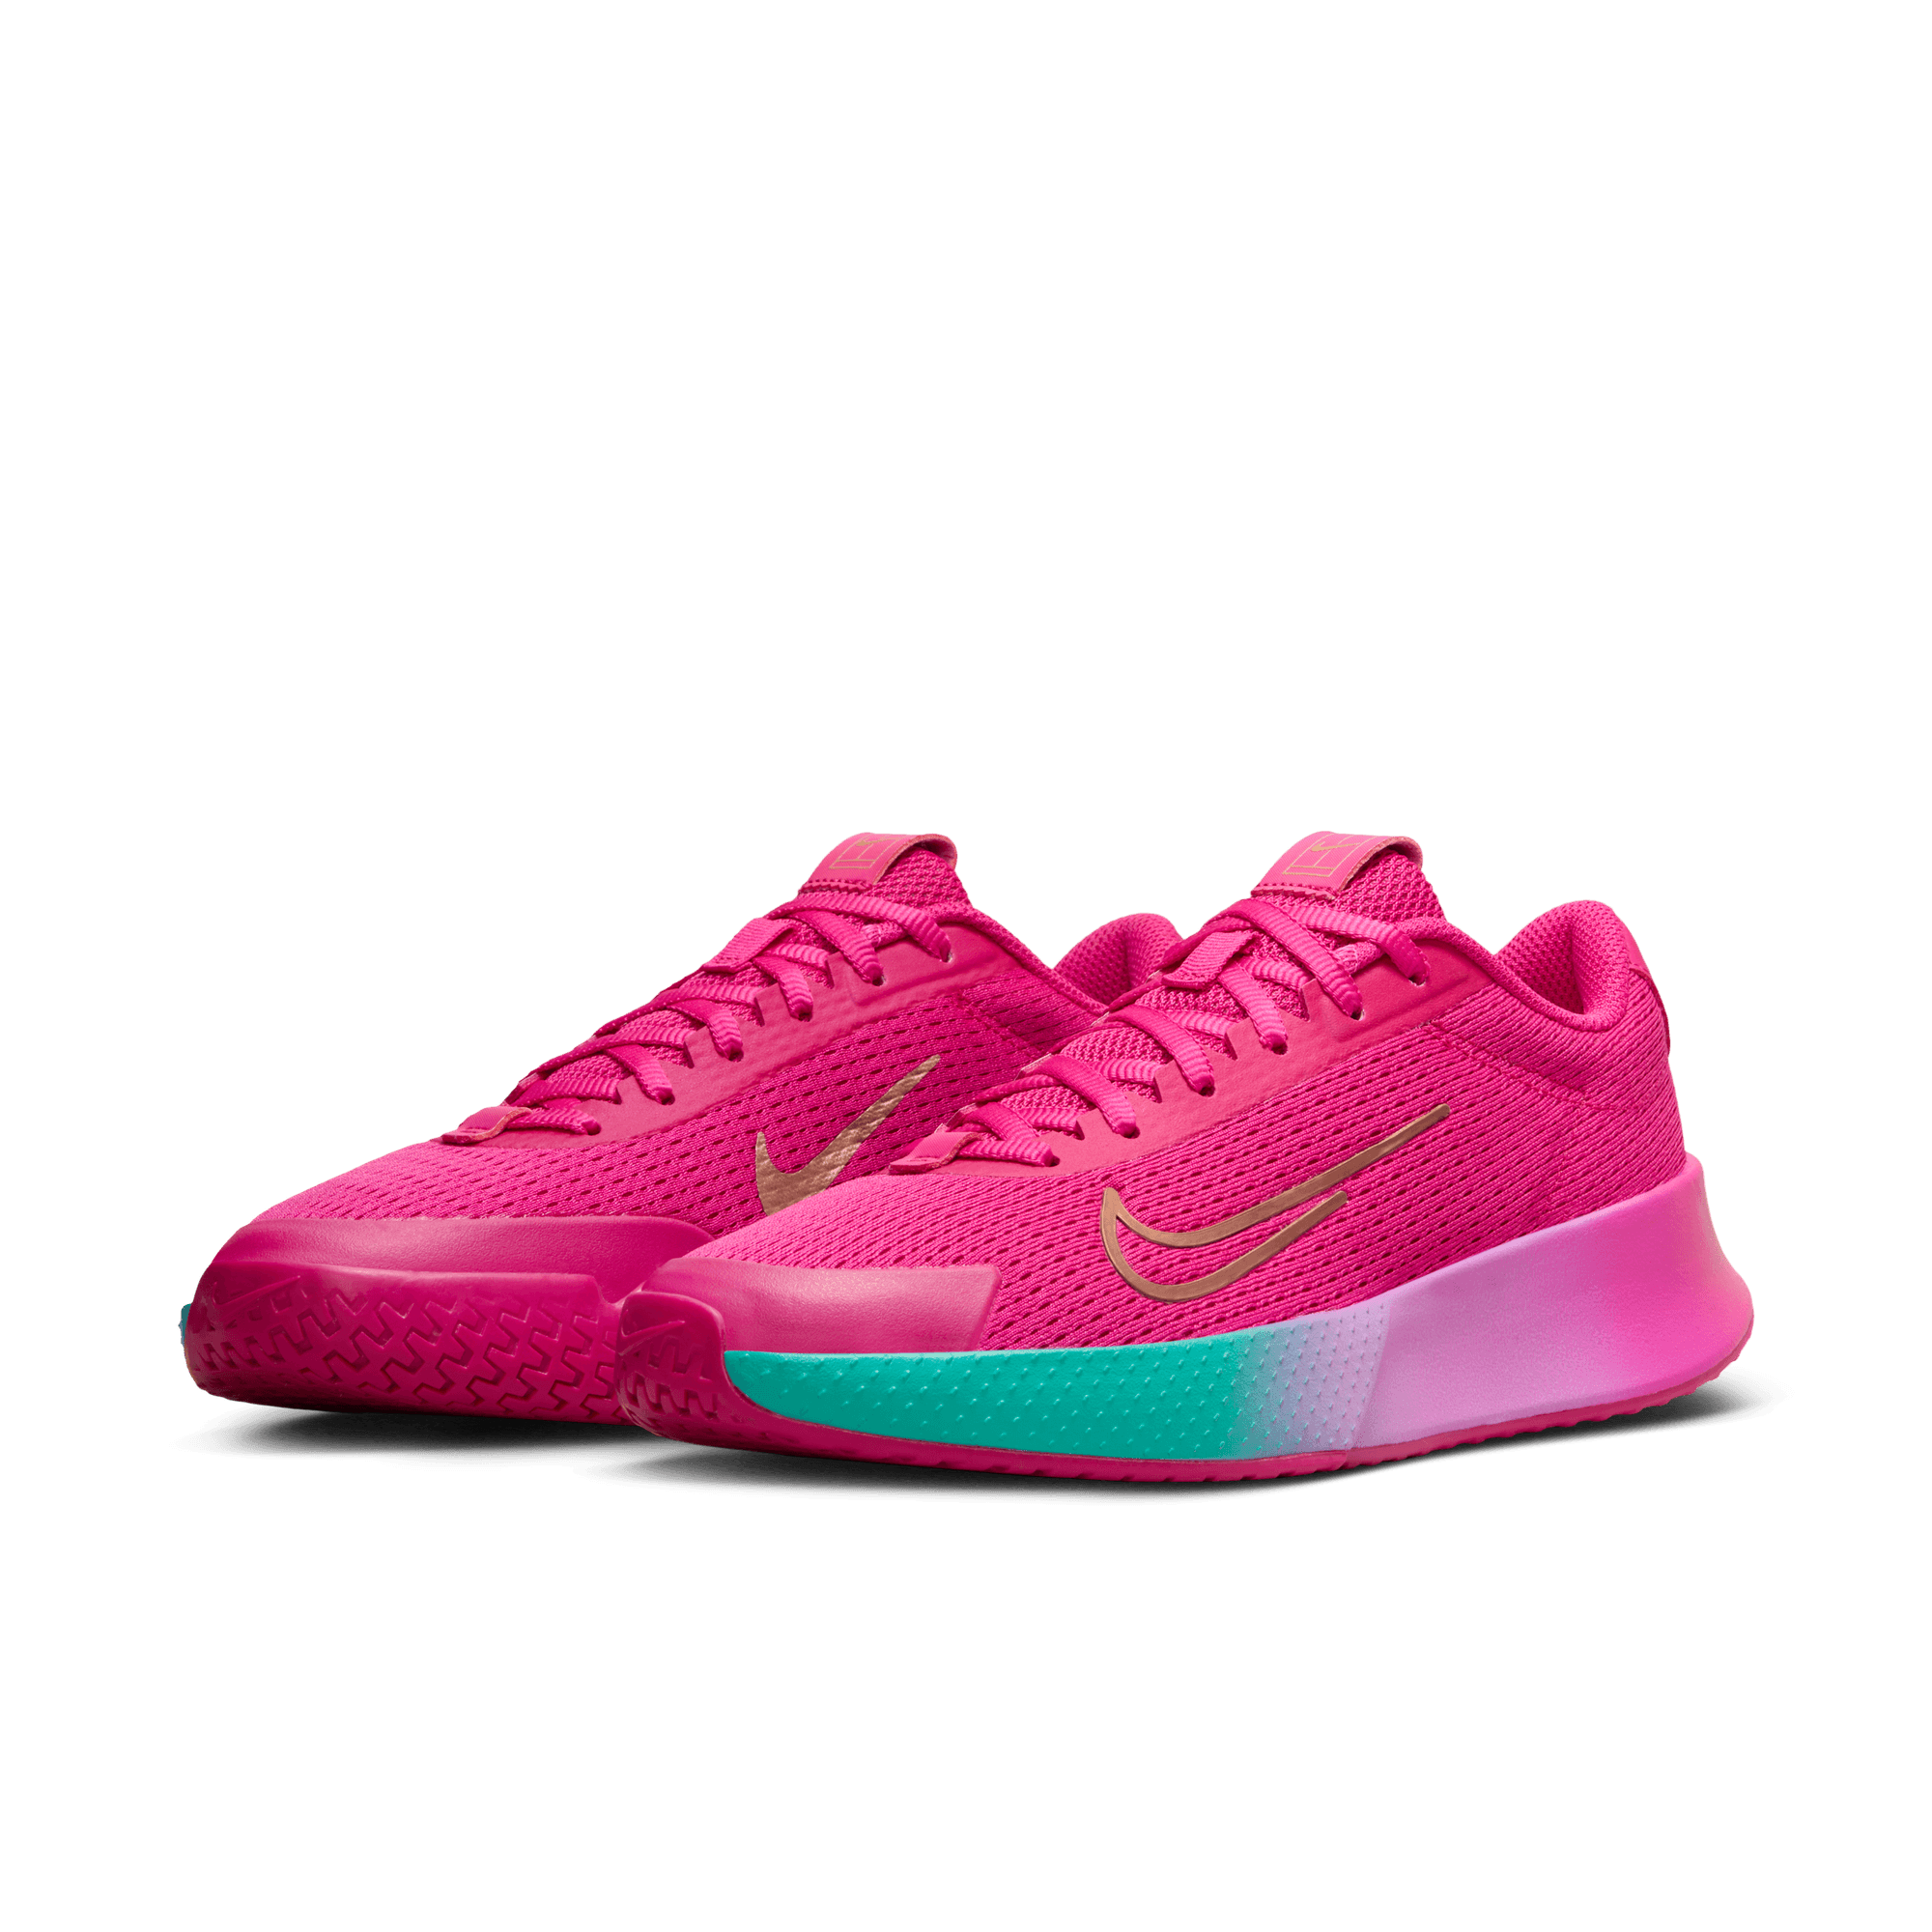 Nike Air 7/8 Hr Tight Pink –